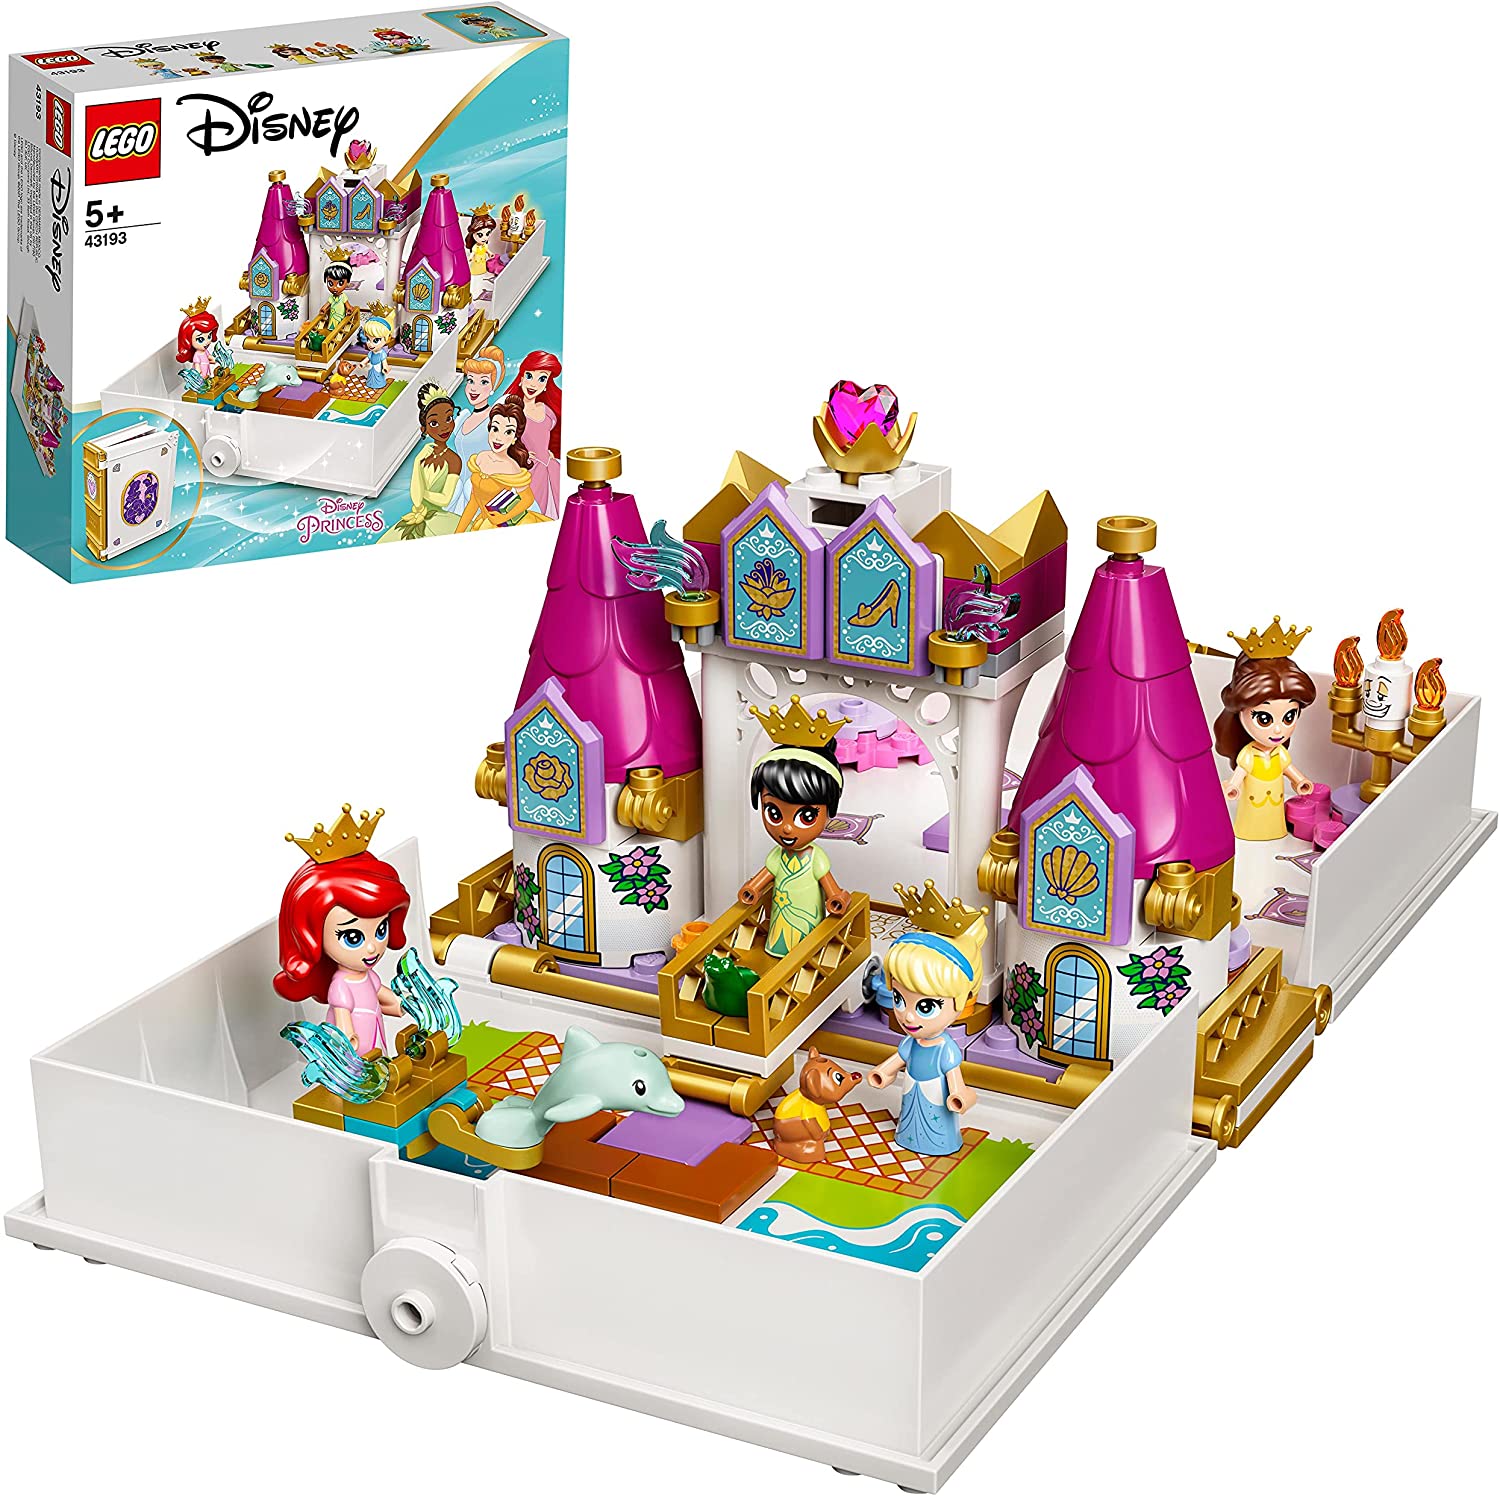 LEGO 43193 Disney Princess Storybook Adventures with Ariel, Belle, Cinderel